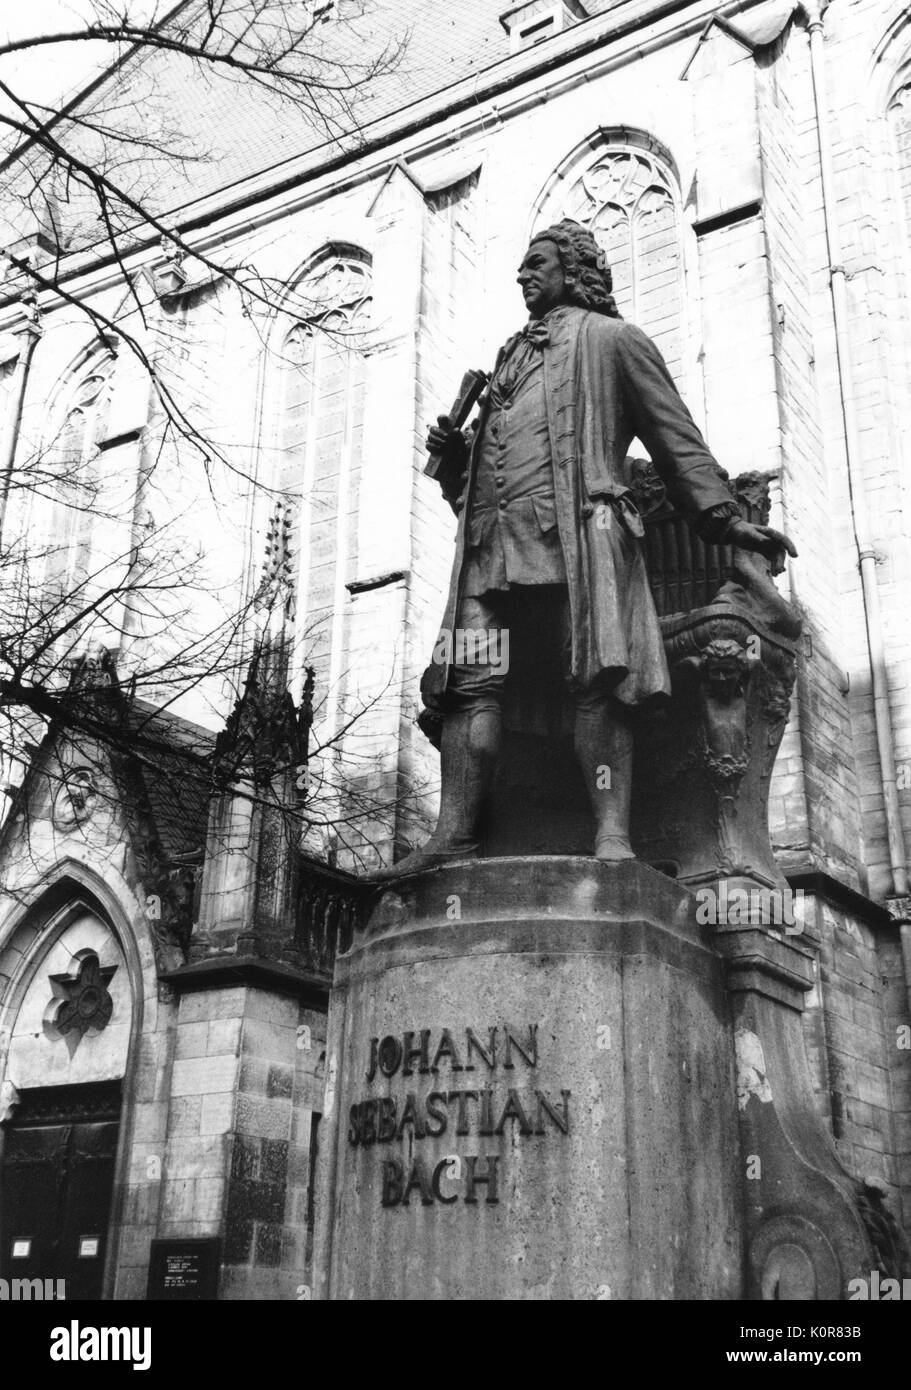 BACH, Johann Sebastian - memorial in Leipzig German composer ( 1685 - 1750 ) Stock Photo